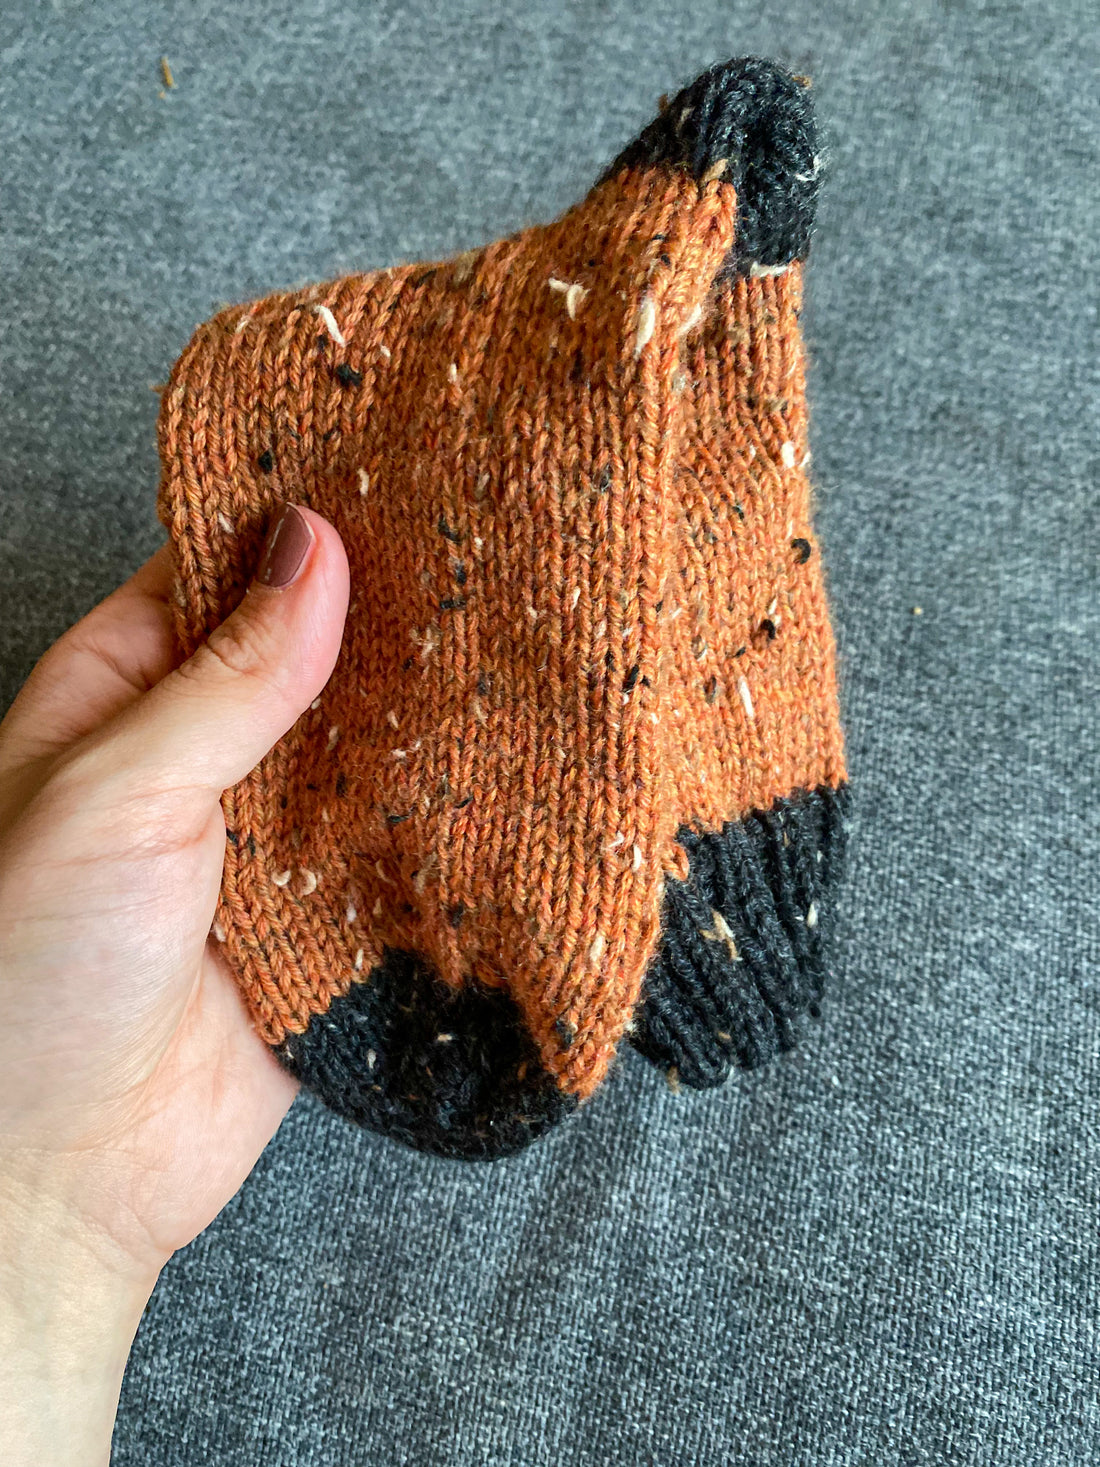 Knit Picks Halloween Socks - FREE sock pattern